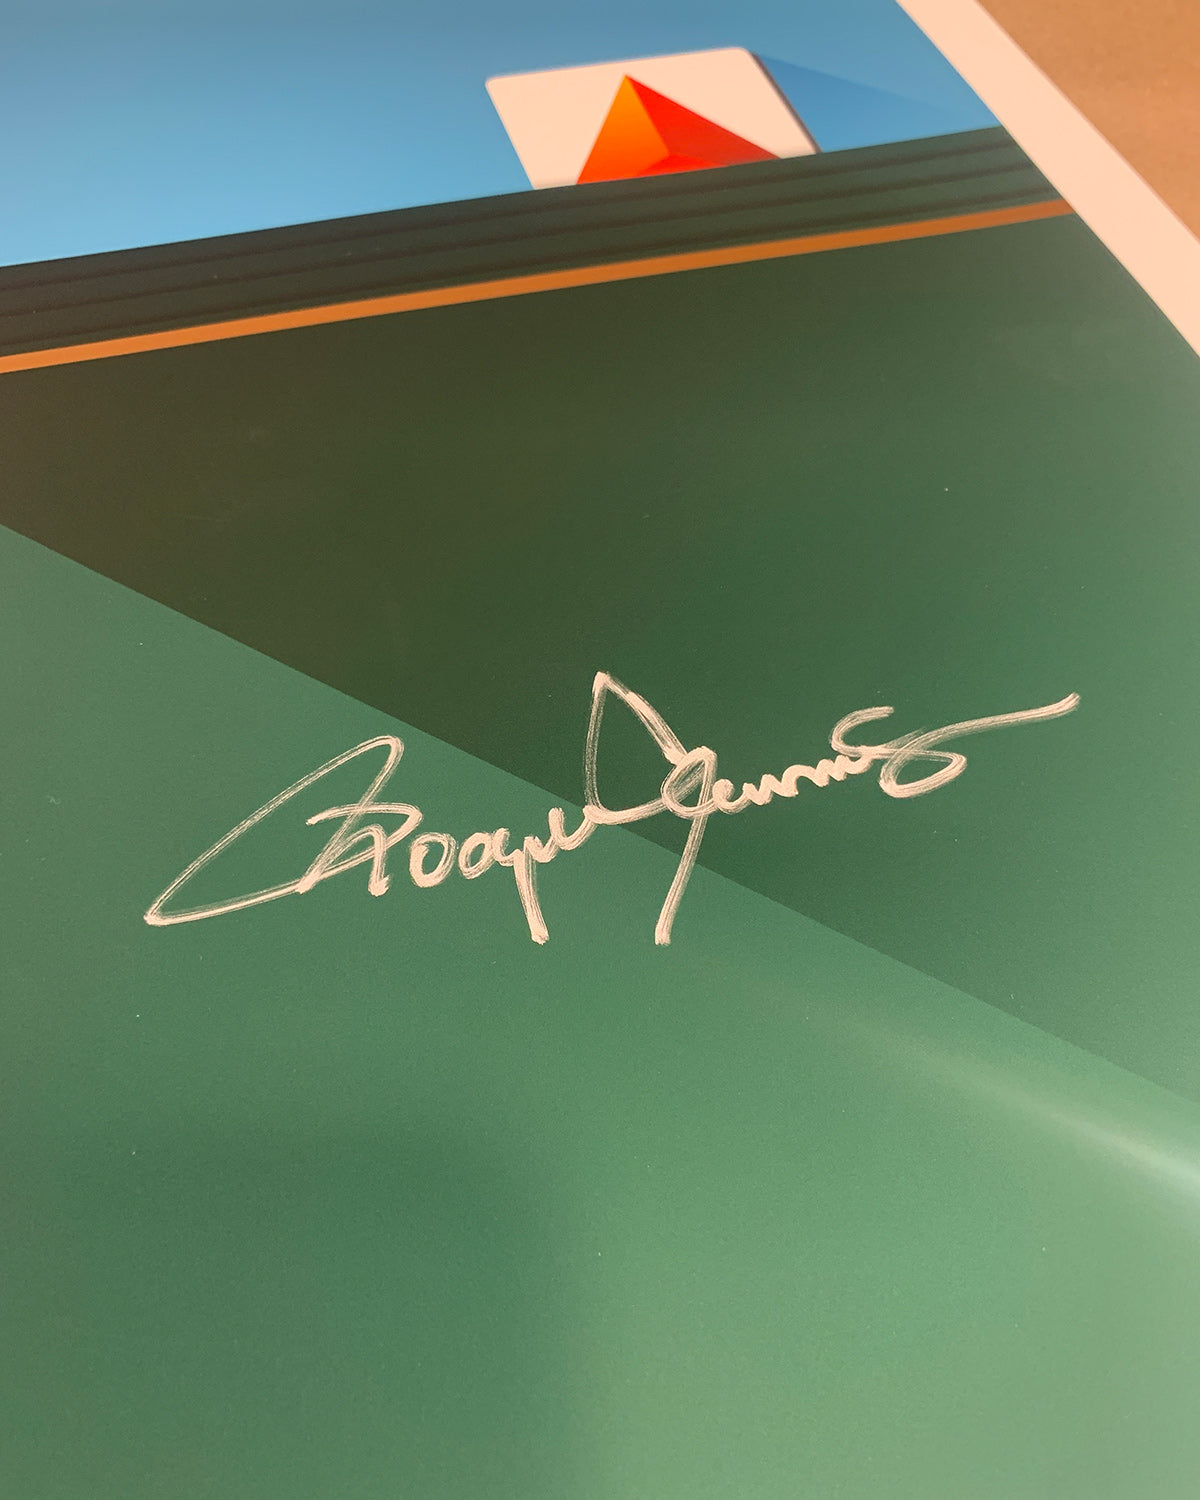 Minimalist Fenway Park - Roger Clemens Autographed - Poster Print - Authenticated